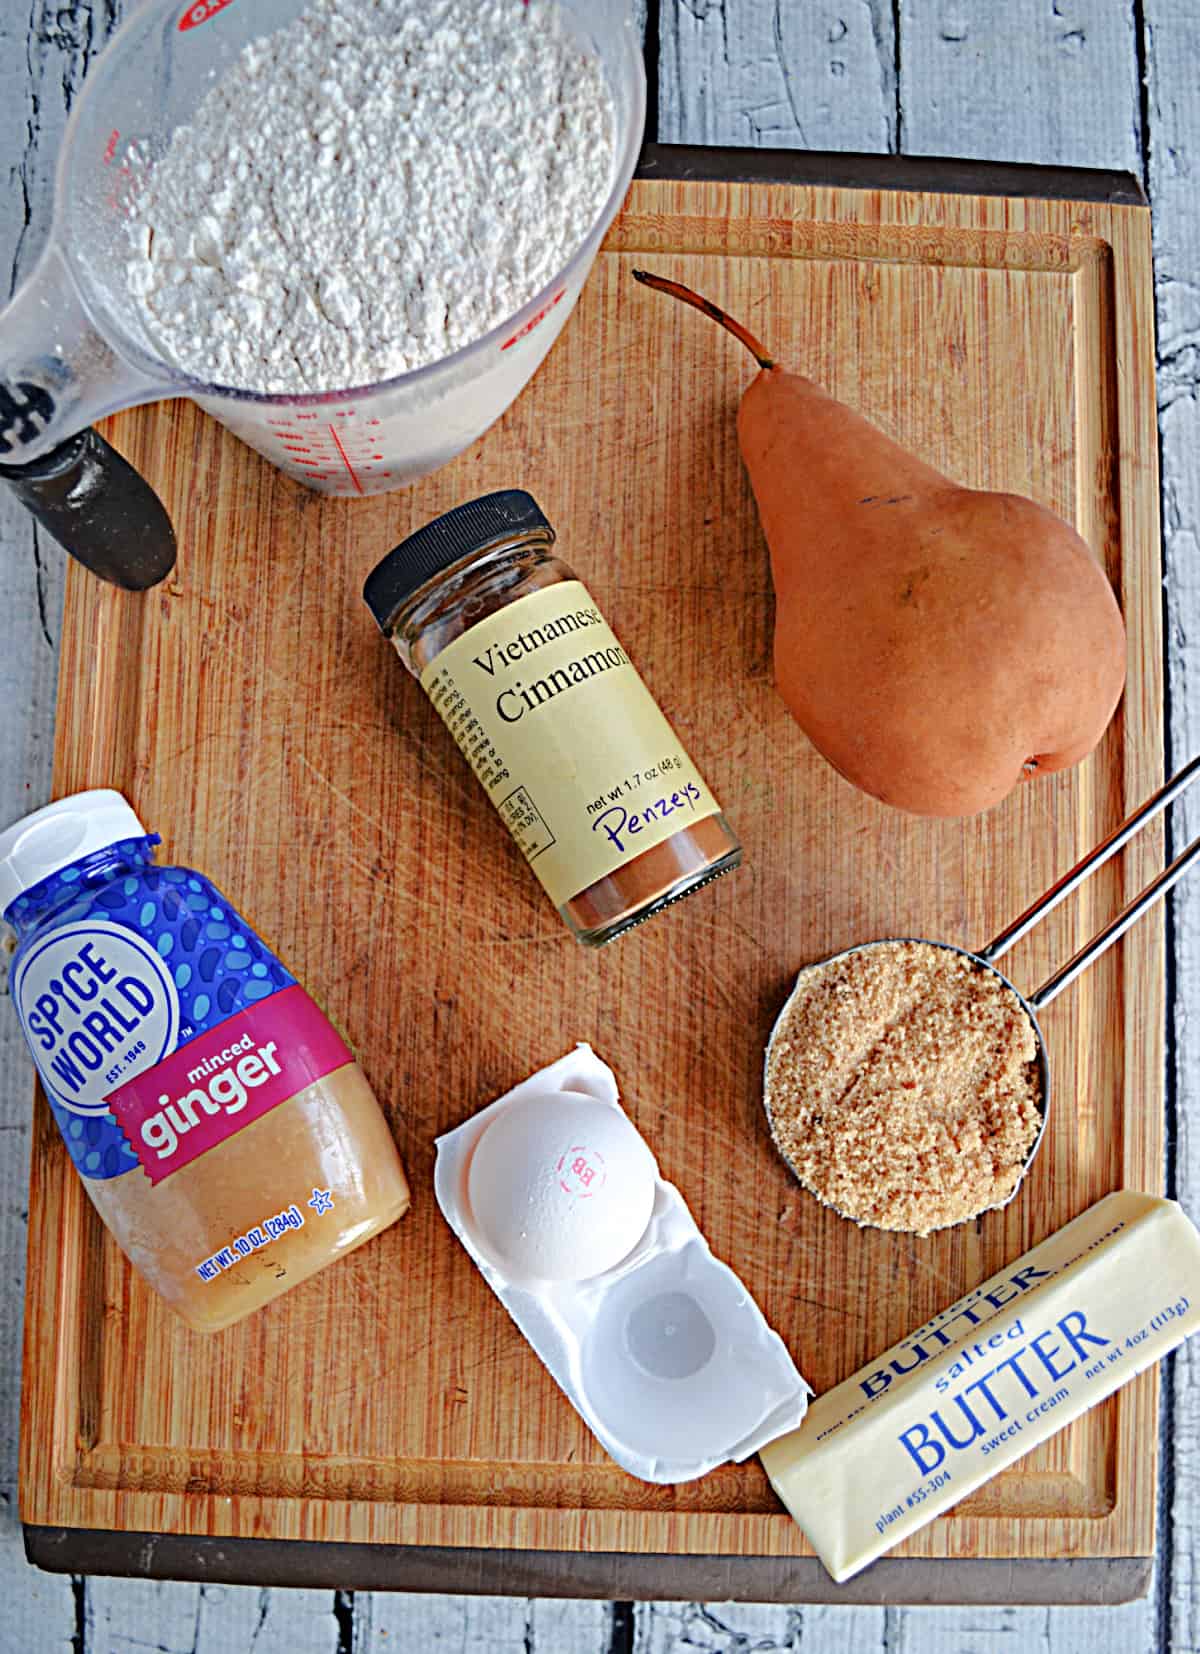 Ingredients to make pear scones.